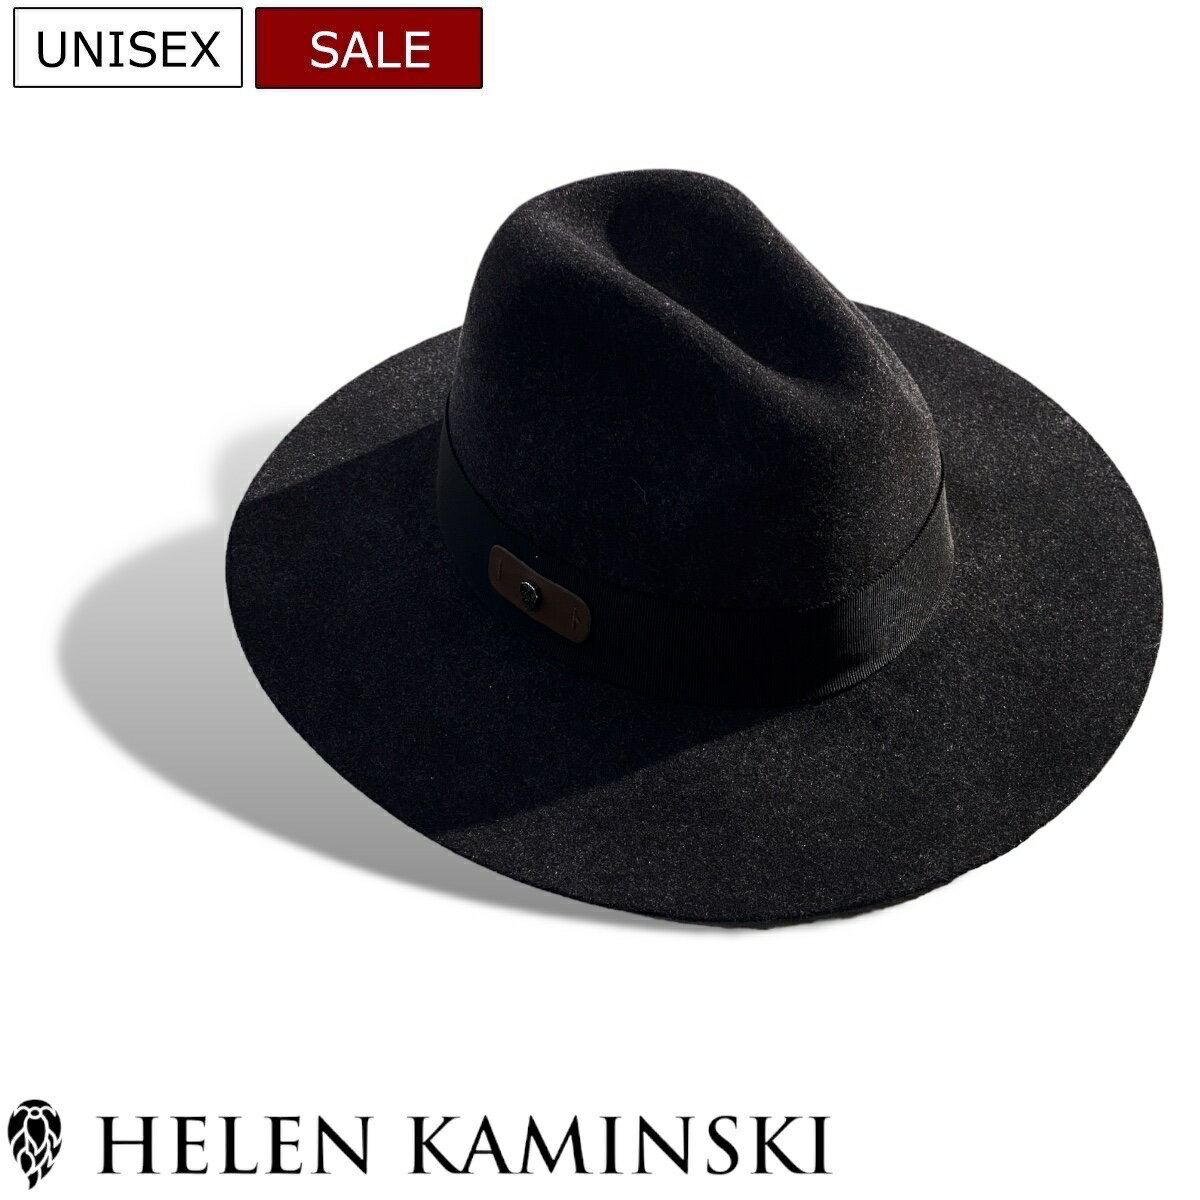 Helen Kaminski -ヘレンカミンスキー- 伝統的なハンドクラフトにモダンなデザインと革新を組み合わせた高品質のメリノウール繊維を使用したフェドーラハット フェルトハット 中折れ帽 帽子 ブラック ユニセックス メンズ レディース